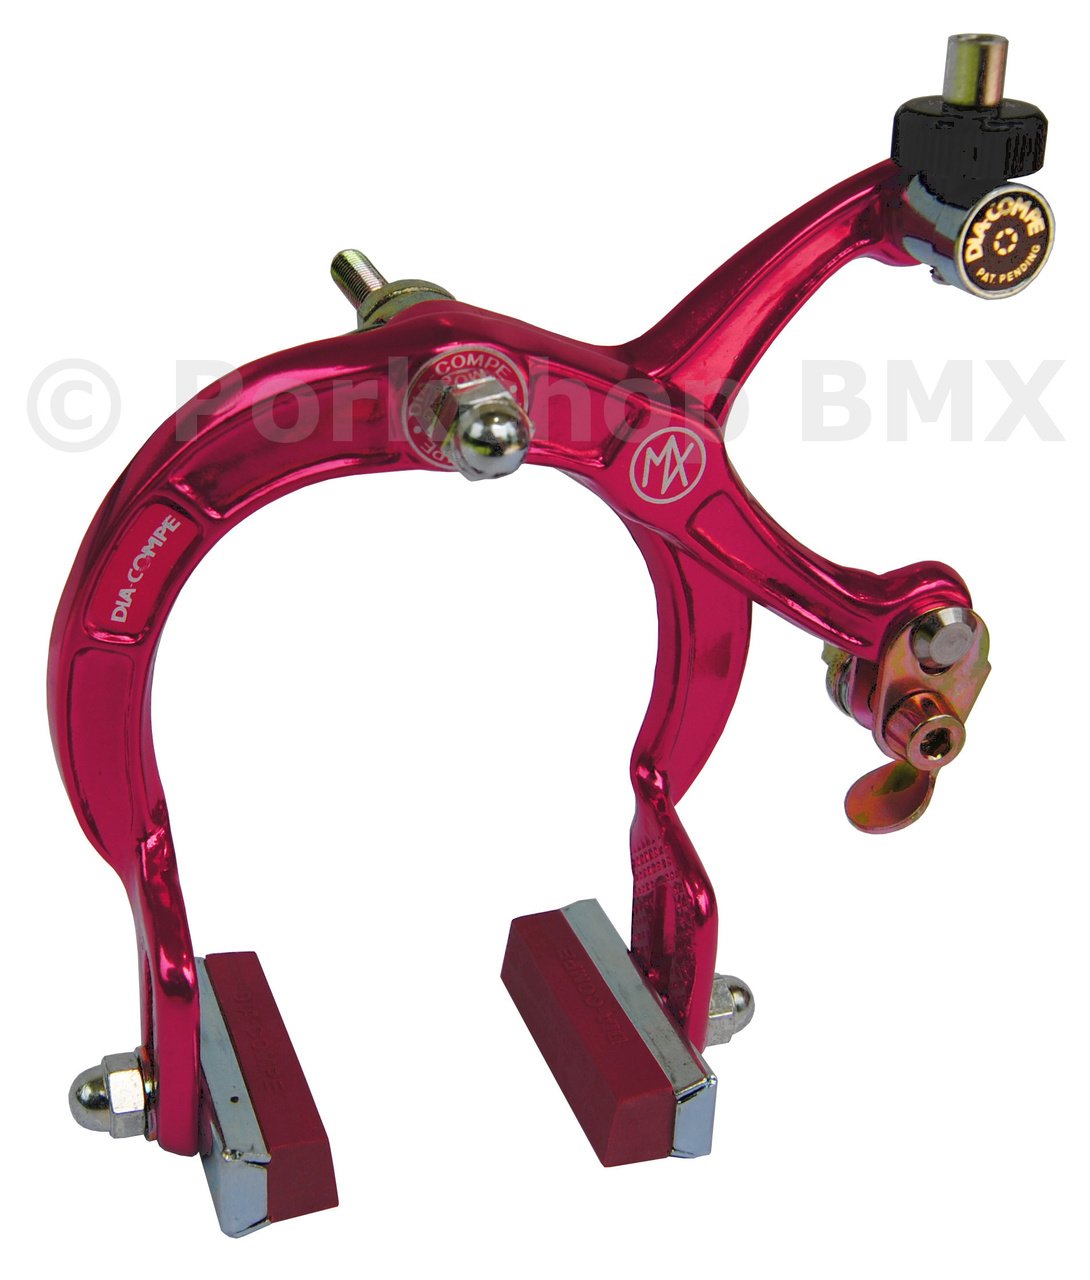 Details about   Anchor bolt for Dia Compe MX1000 MX900 brake caliper old school bmx Shimano NOS 